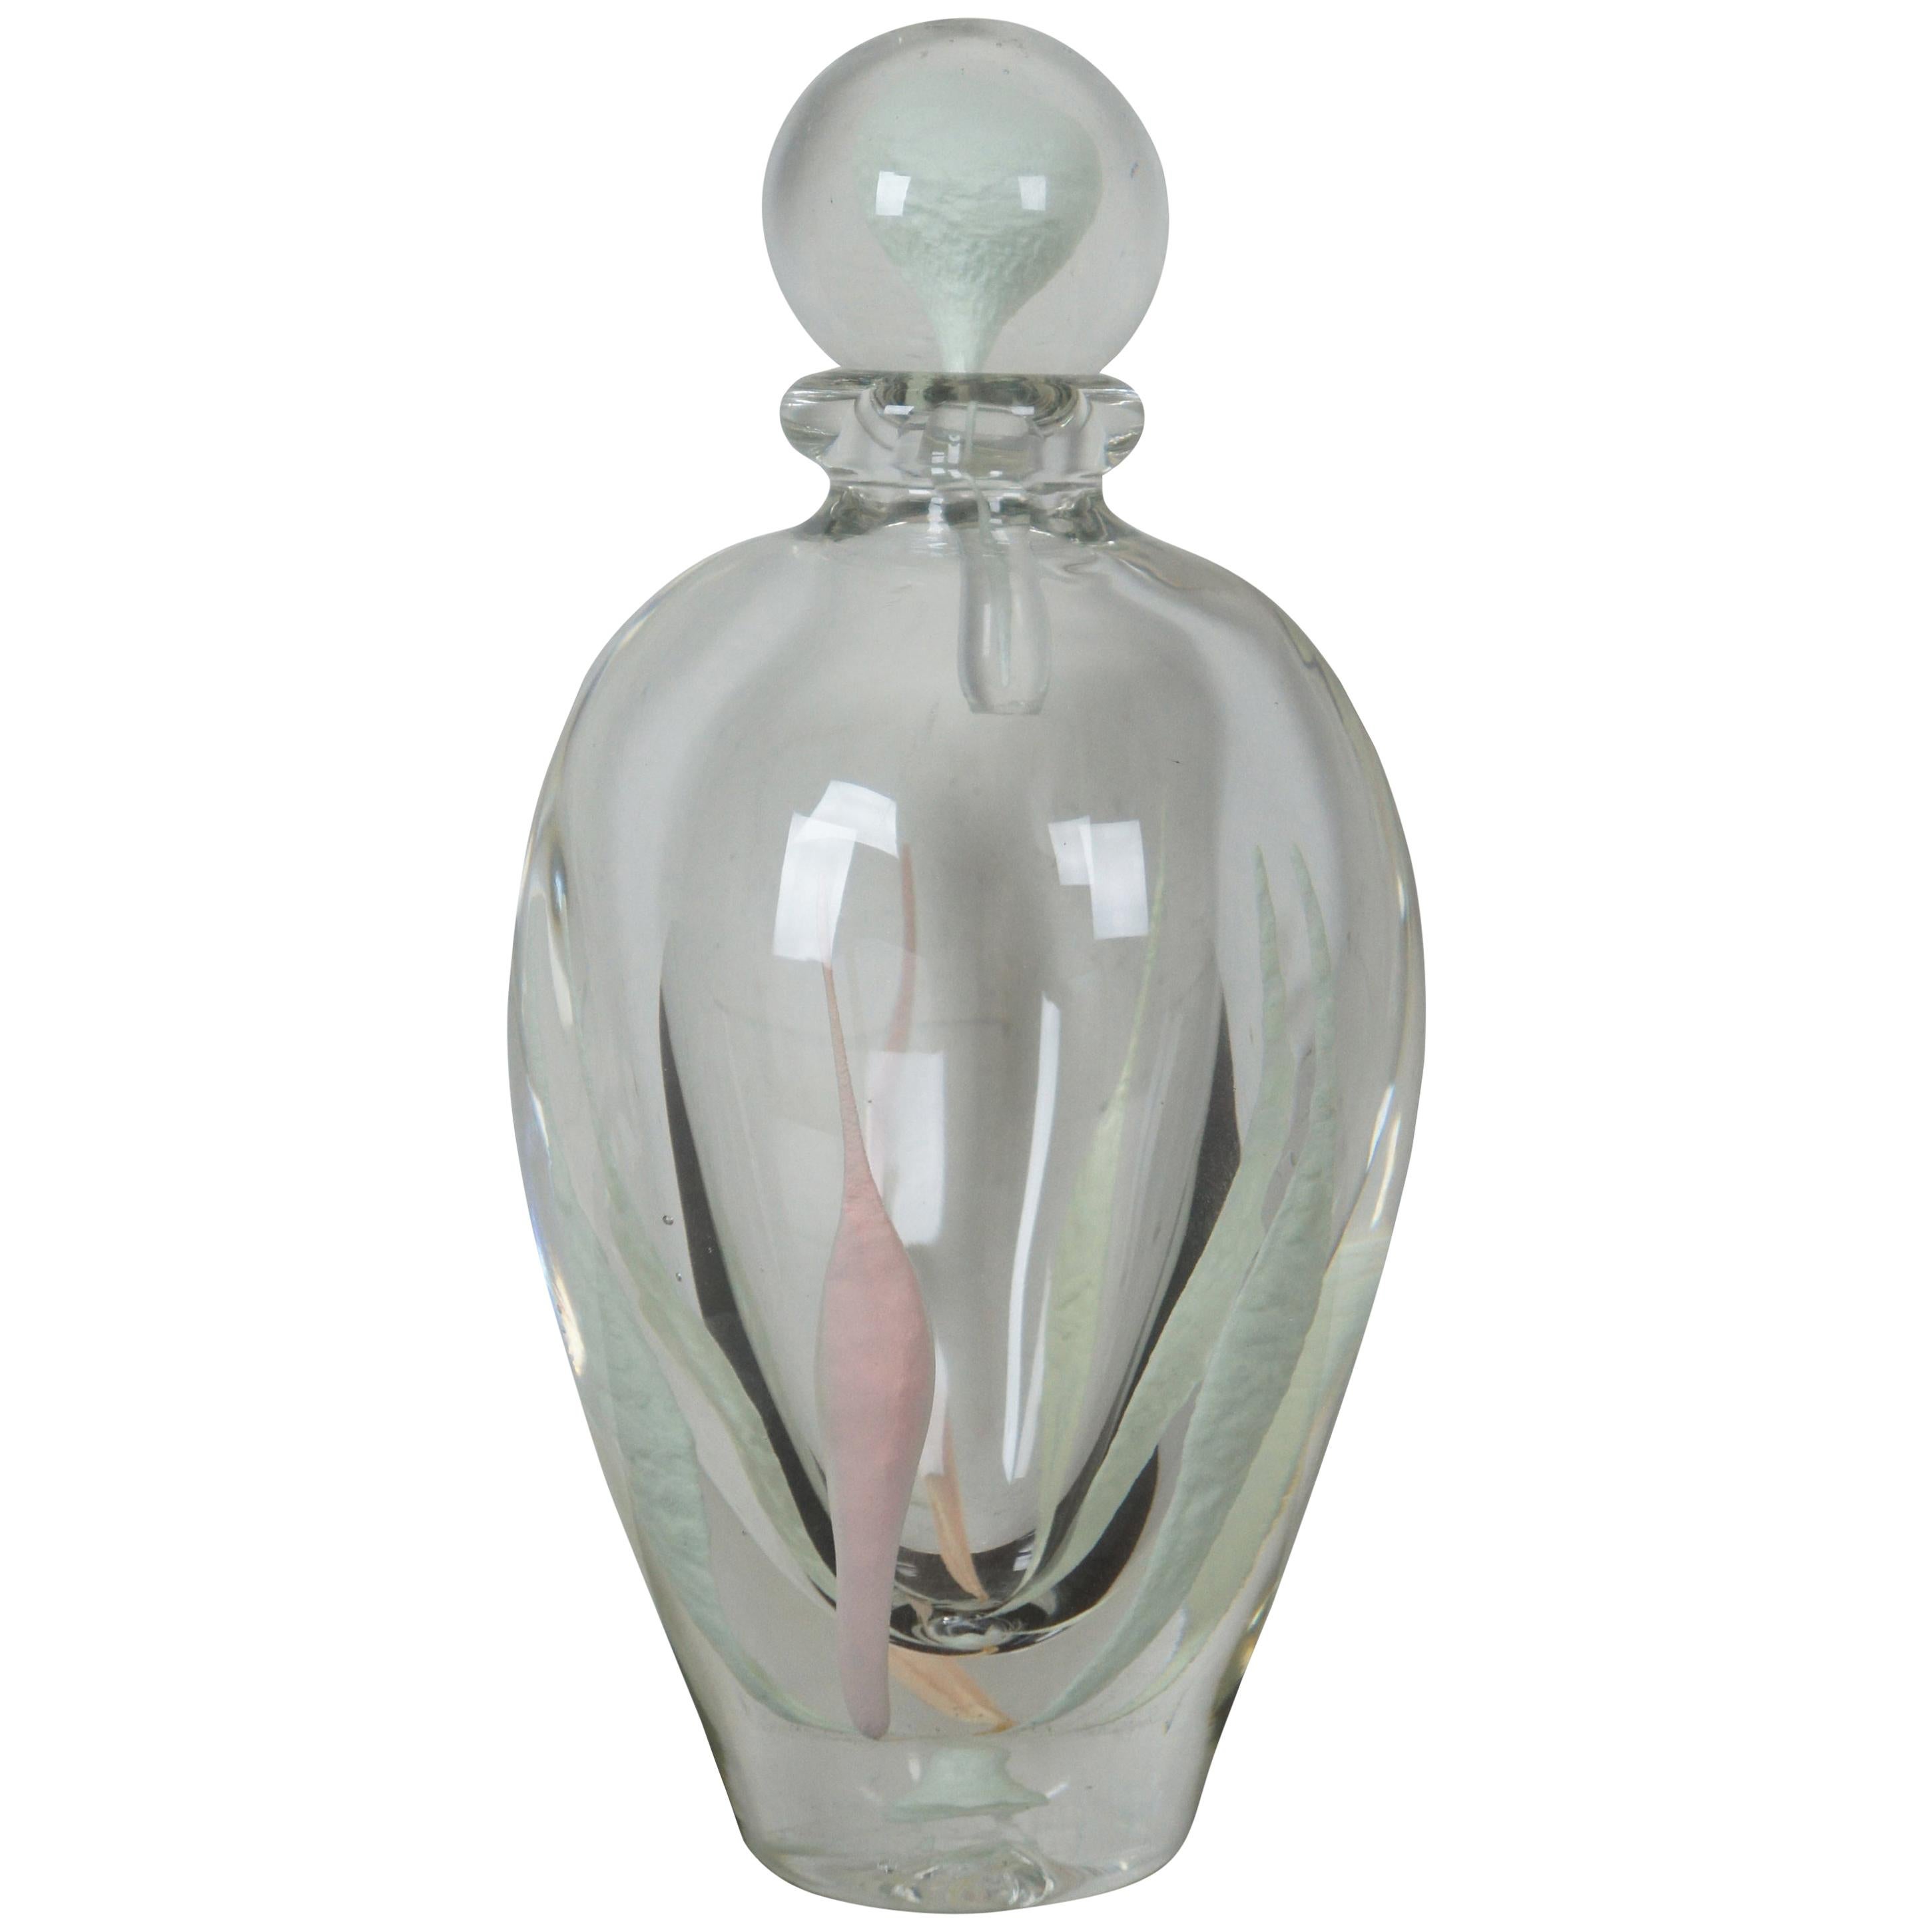 Jean Claude Novaro Glow in the Dark Art Glass Modern Decanter Bottle Vase